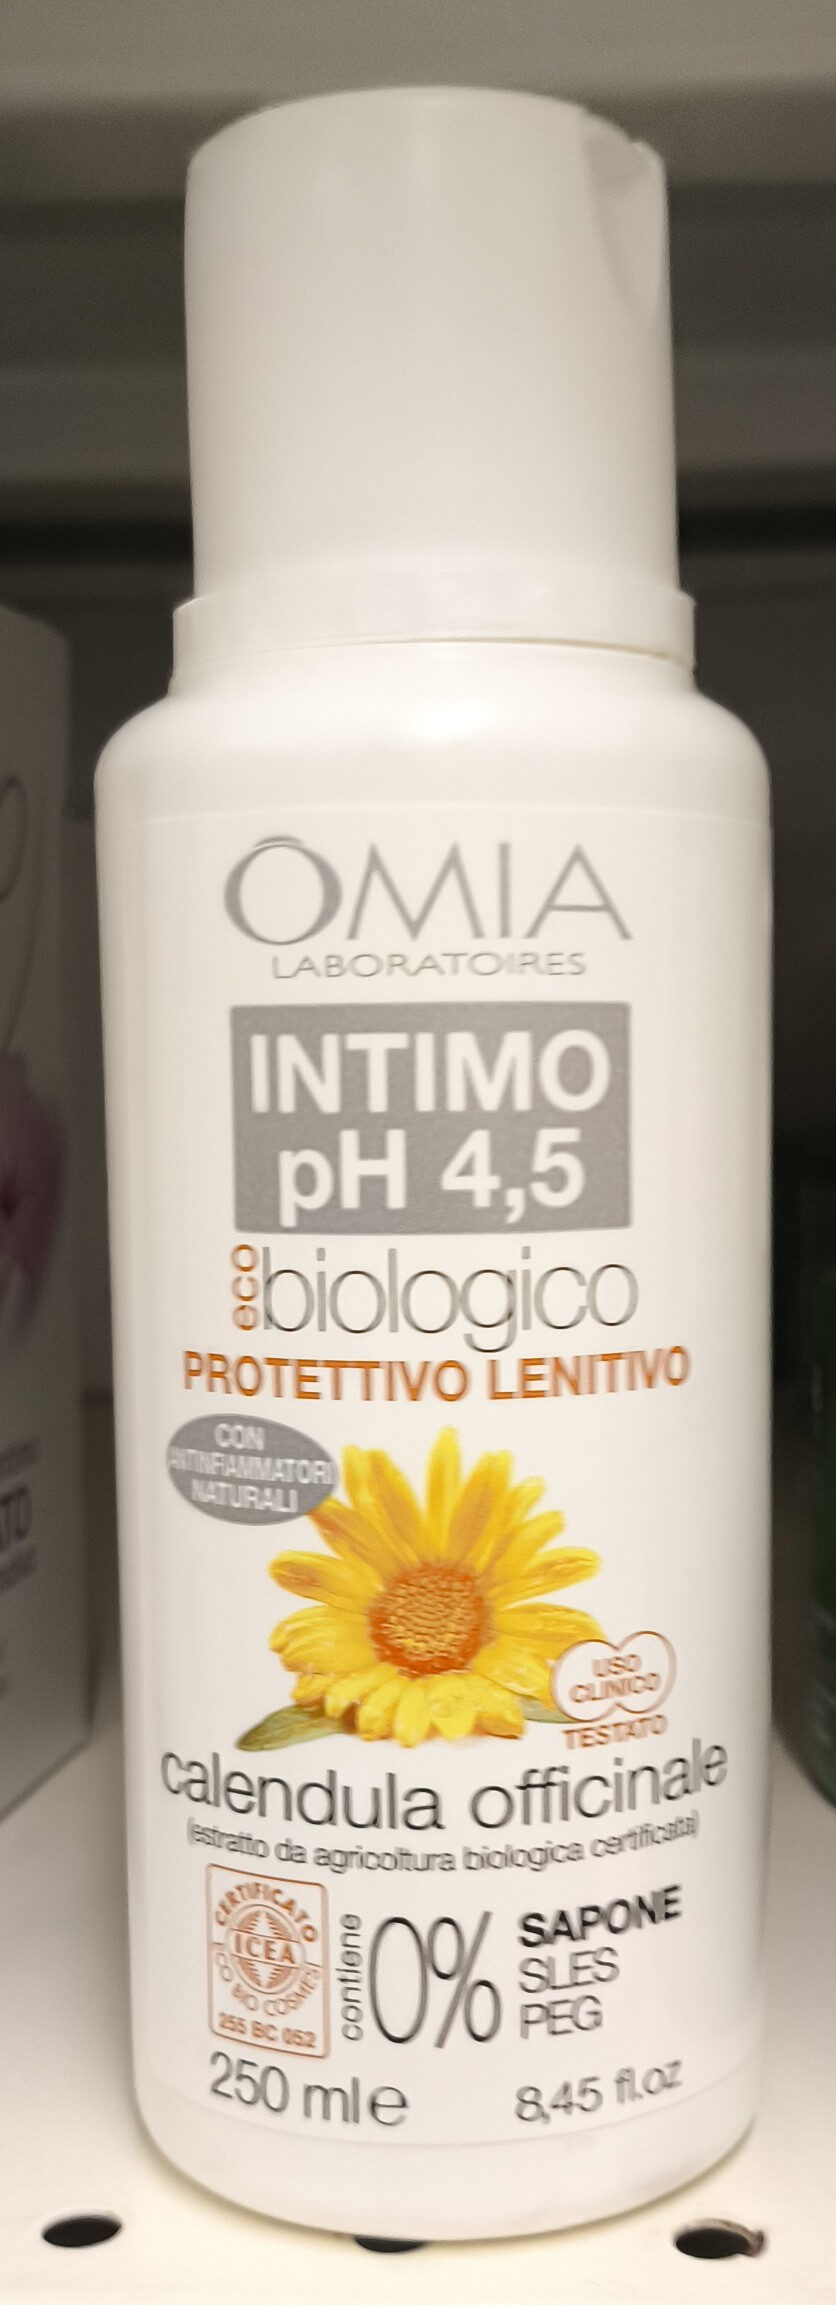 Intimo ph 4,5 - 製品 - it